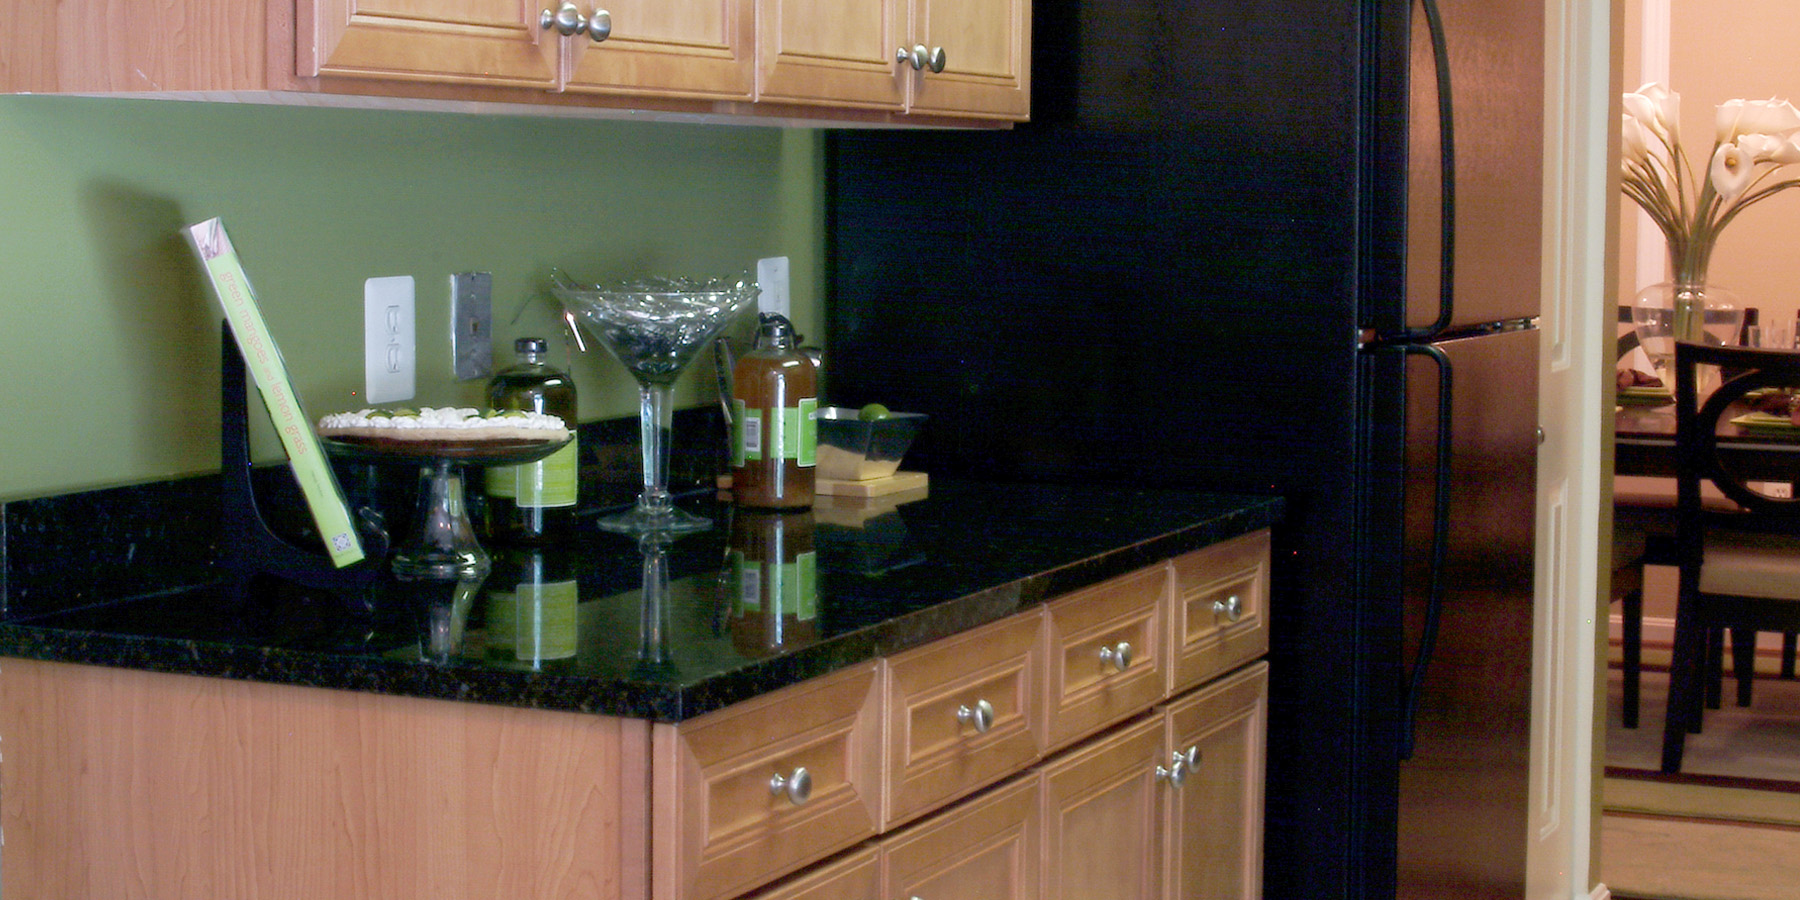 Glen Oaks kitchen with granite counter tops